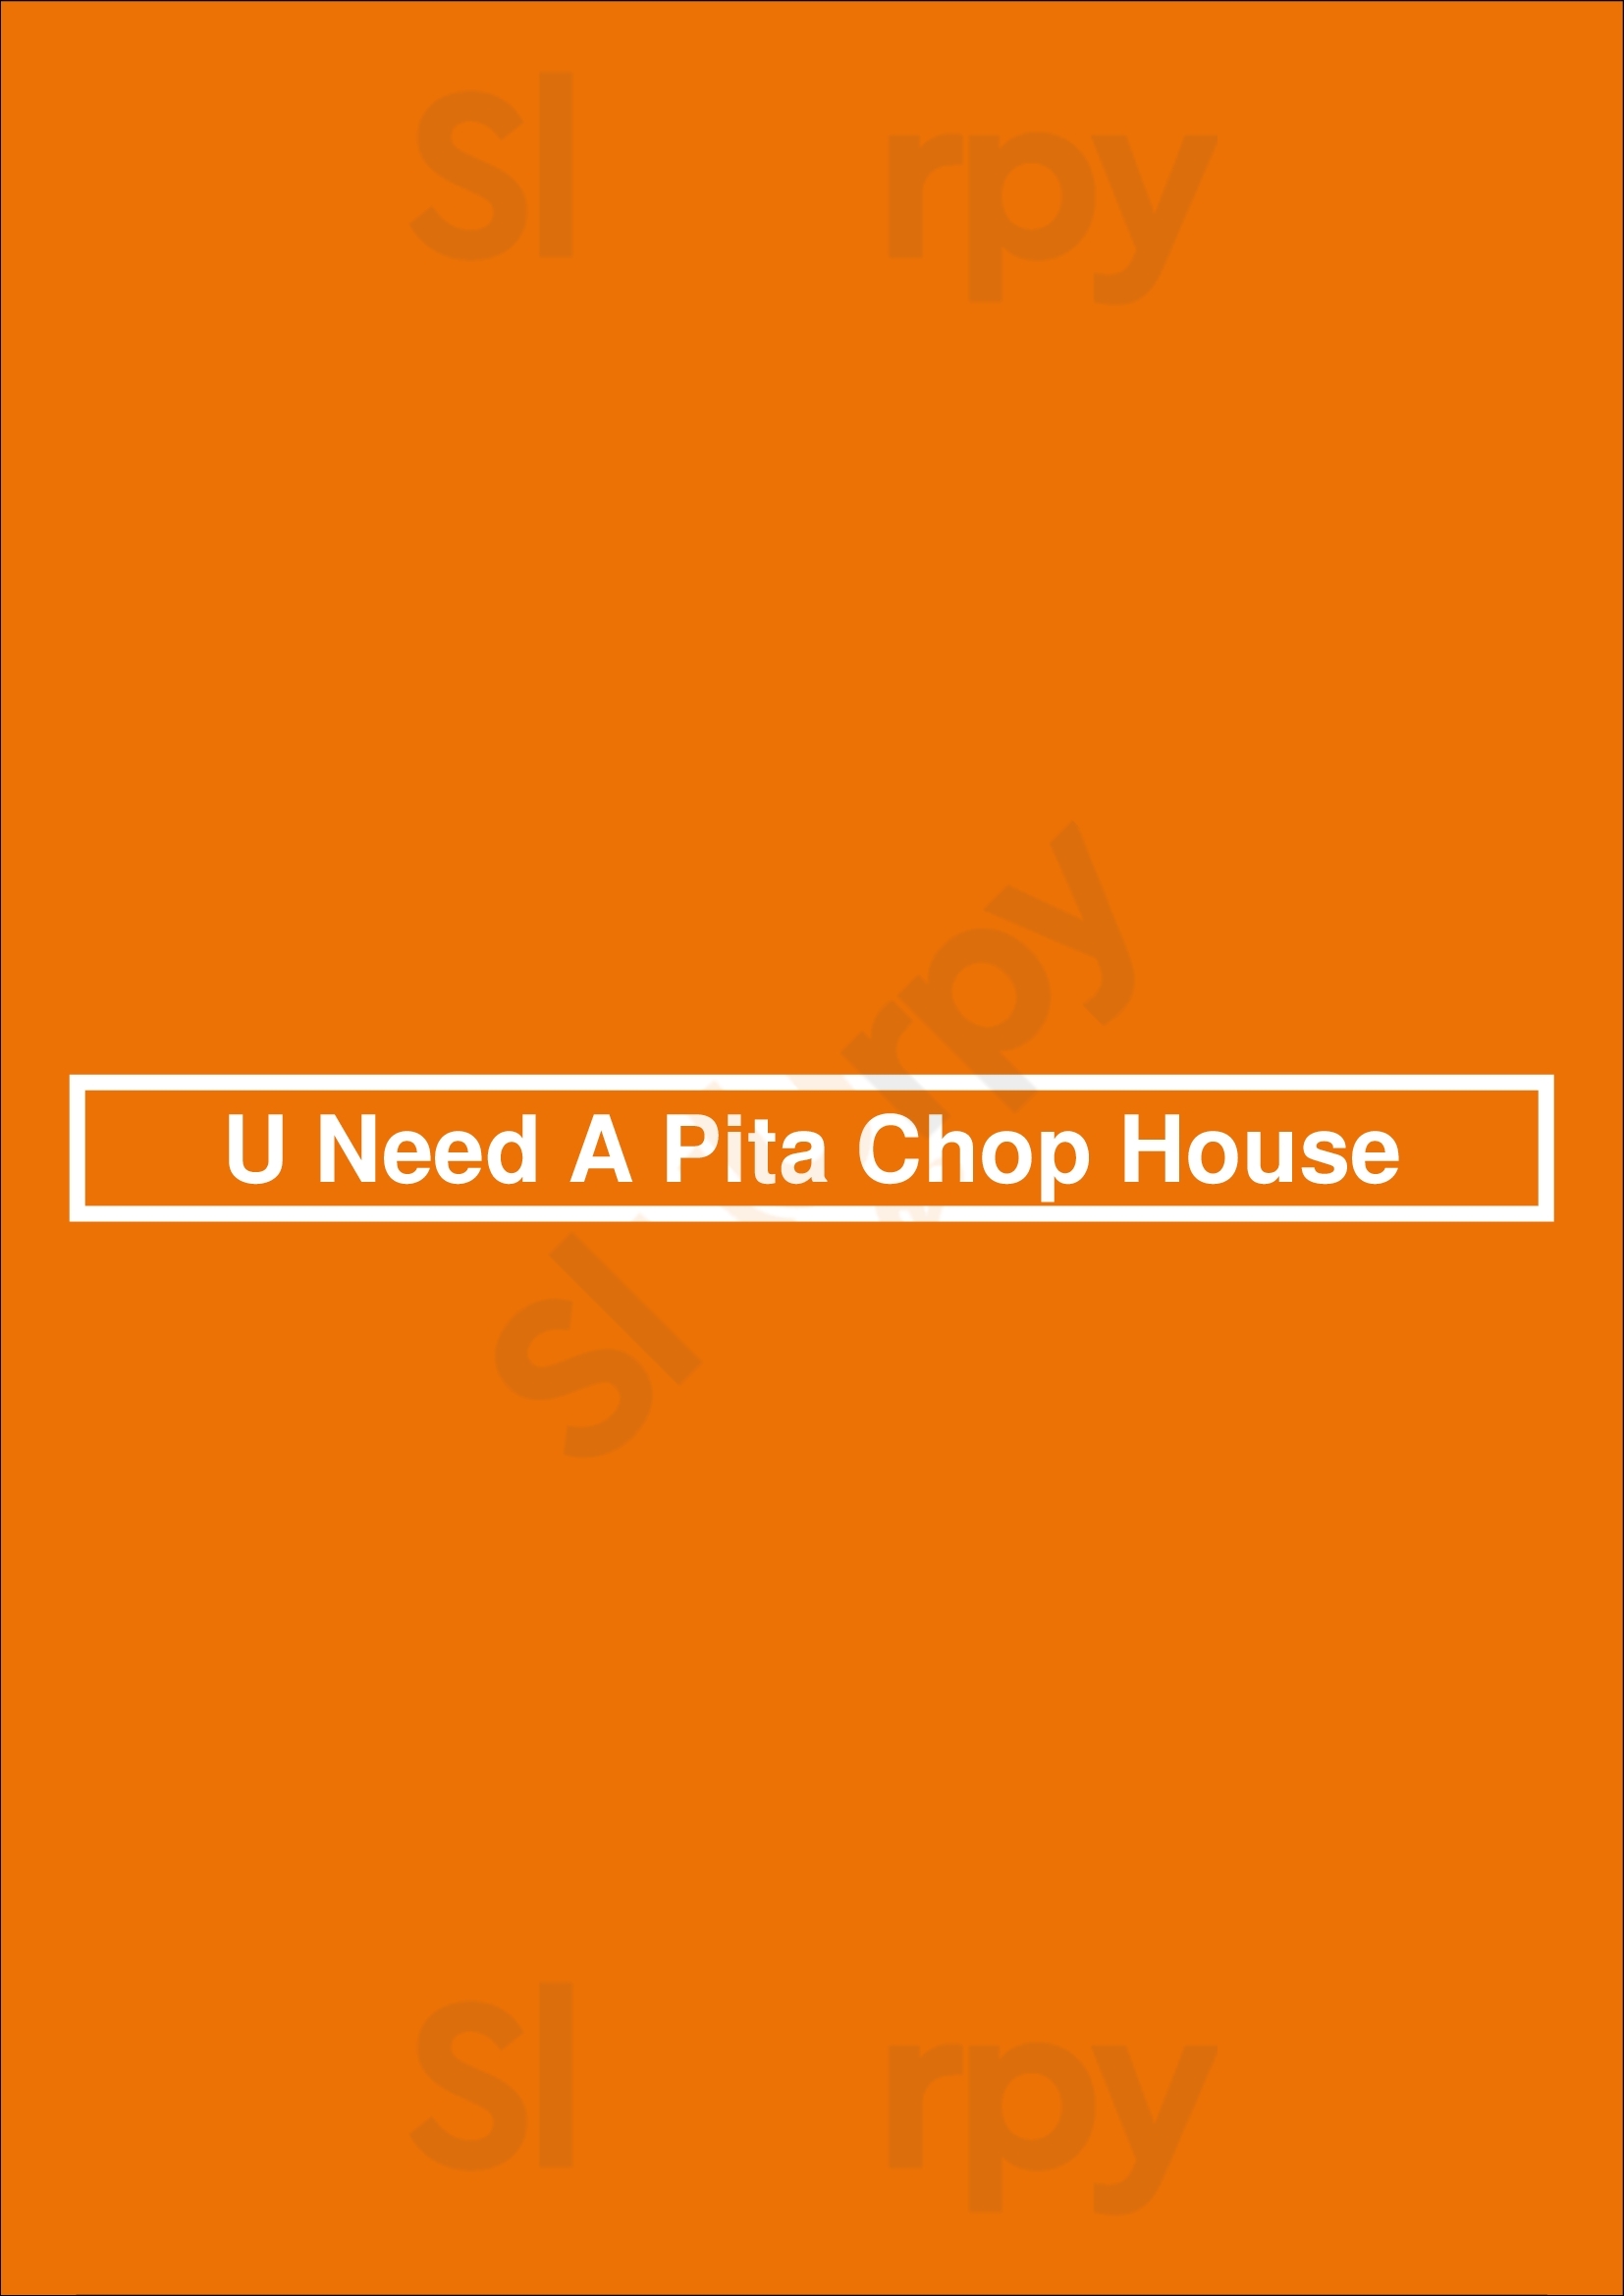 U Need A Pita Chop House Niagara Falls Menu - 1